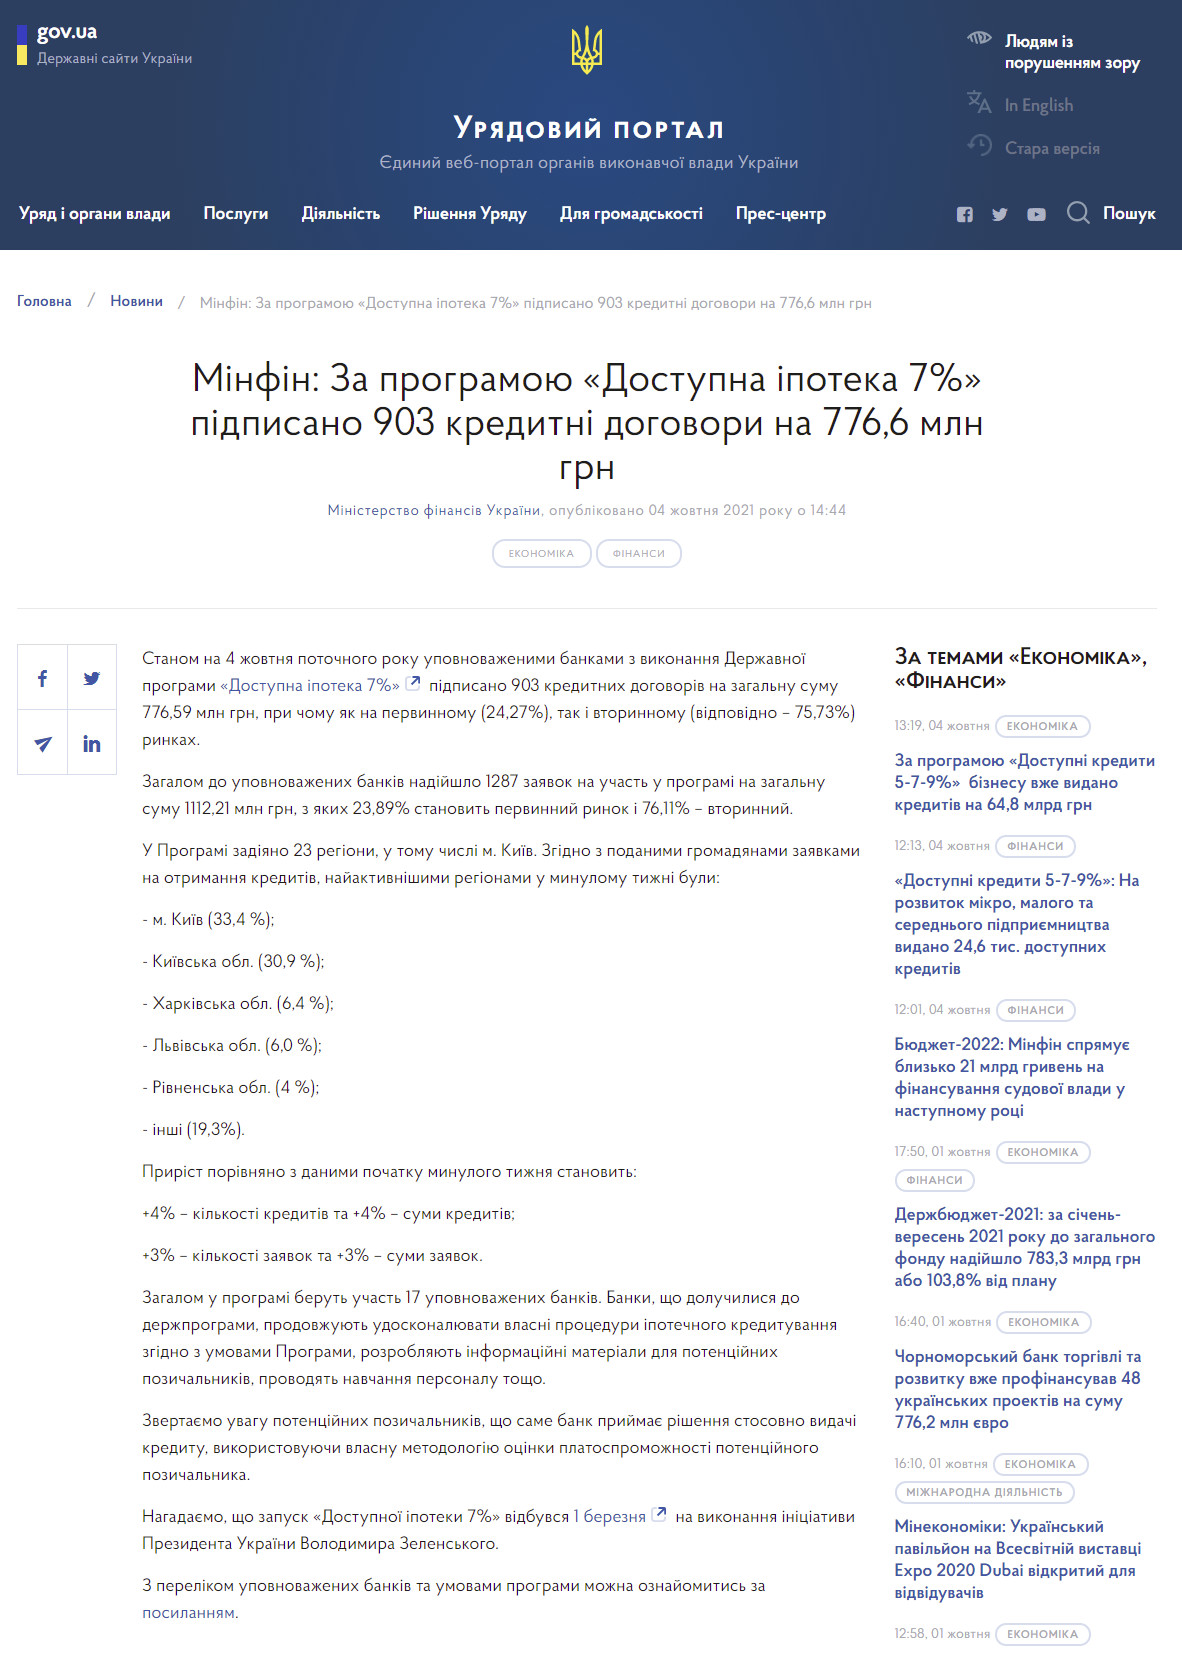 https://www.kmu.gov.ua/news/minfin-za-programoyu-dostupna-ipoteka-7-pidpisano-903-kreditni-dogovori-na-7766-mln-grn